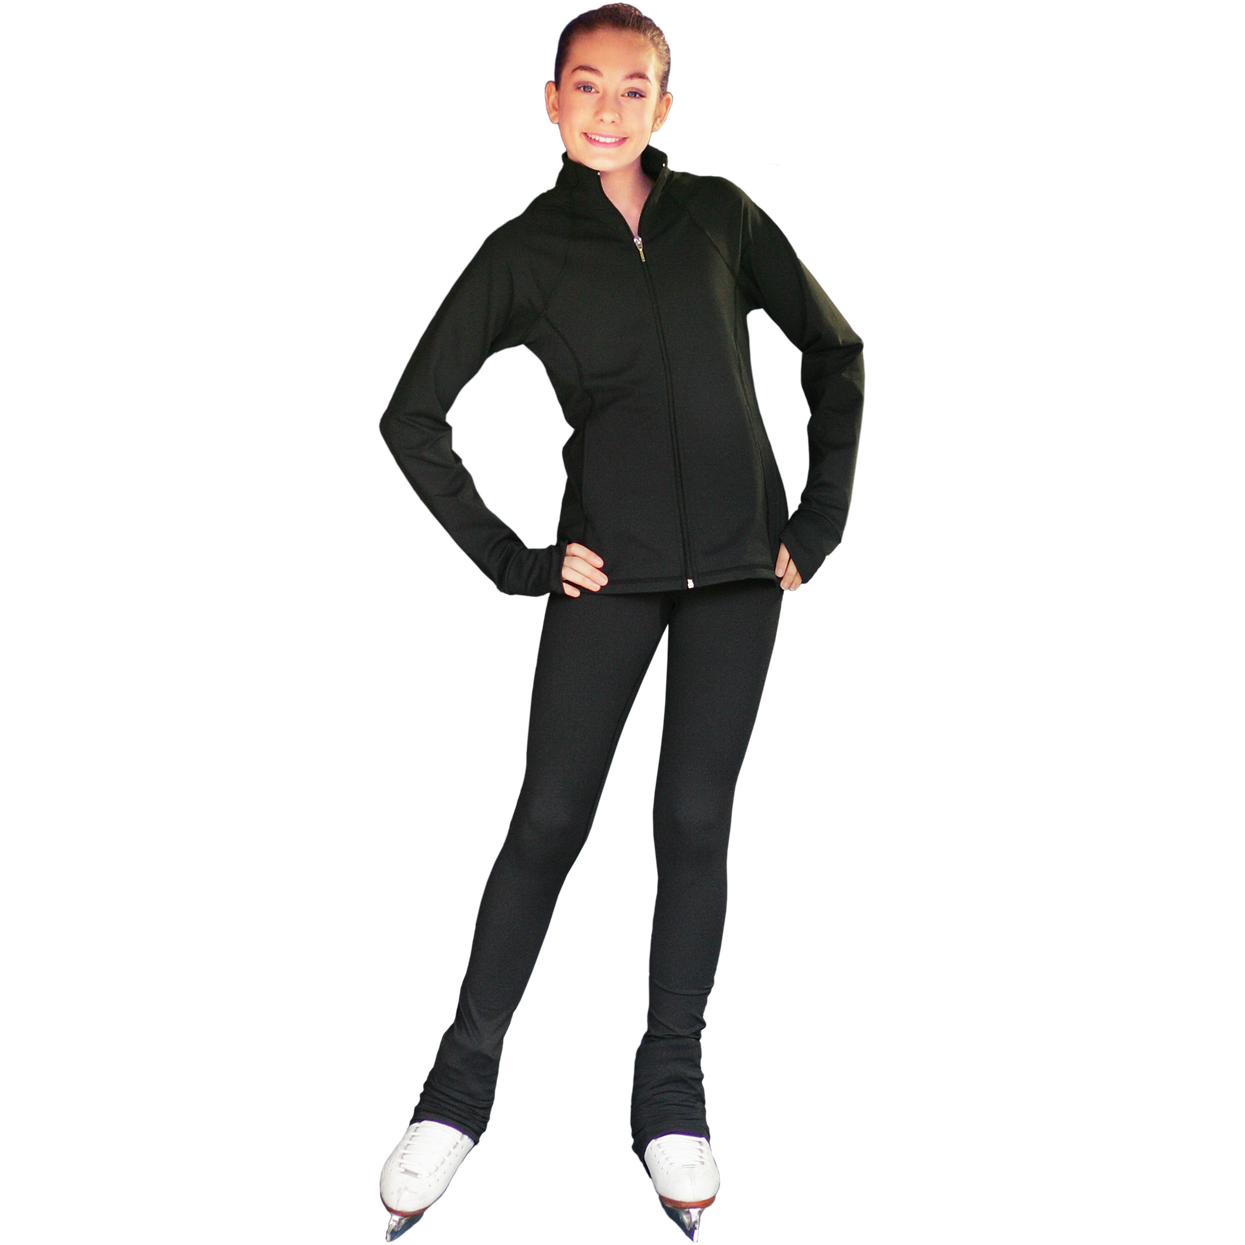 ChloeNoel PS792 3" Waist Band Black/Color Cuffs Elite Pants w/Front Pocket - The Sharper Edge Skates